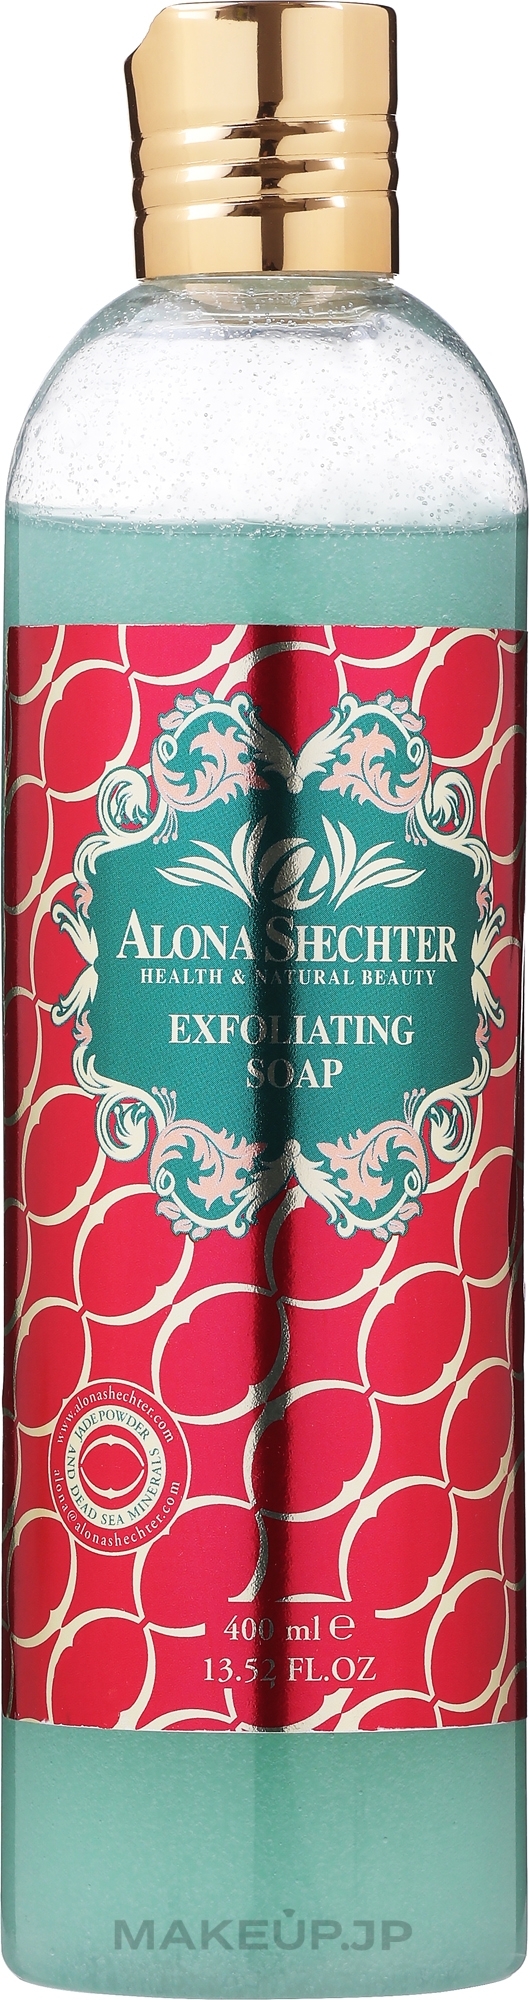 Dead Sea Minerals Facial Exfoliating Soap - Alona Shechter Exfoliating Soap — photo 400 ml